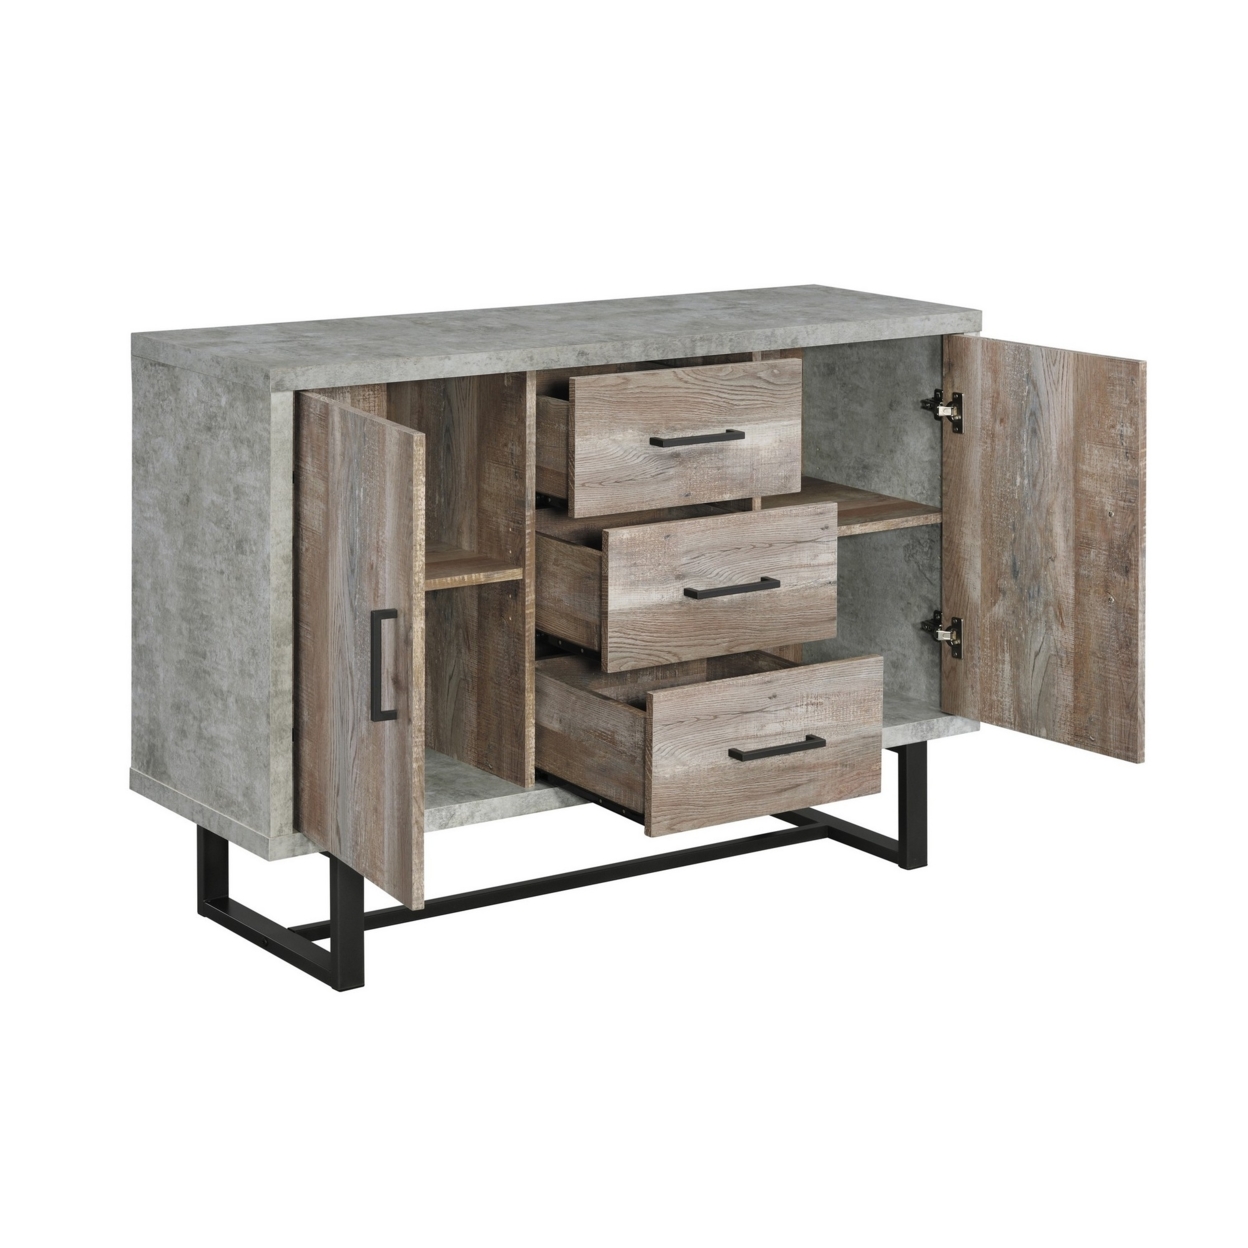 47 Inch 3 Drawer Sideboard Console Cabinet, Sled Legs, Gray Faux Concrete- Saltoro Sherpi